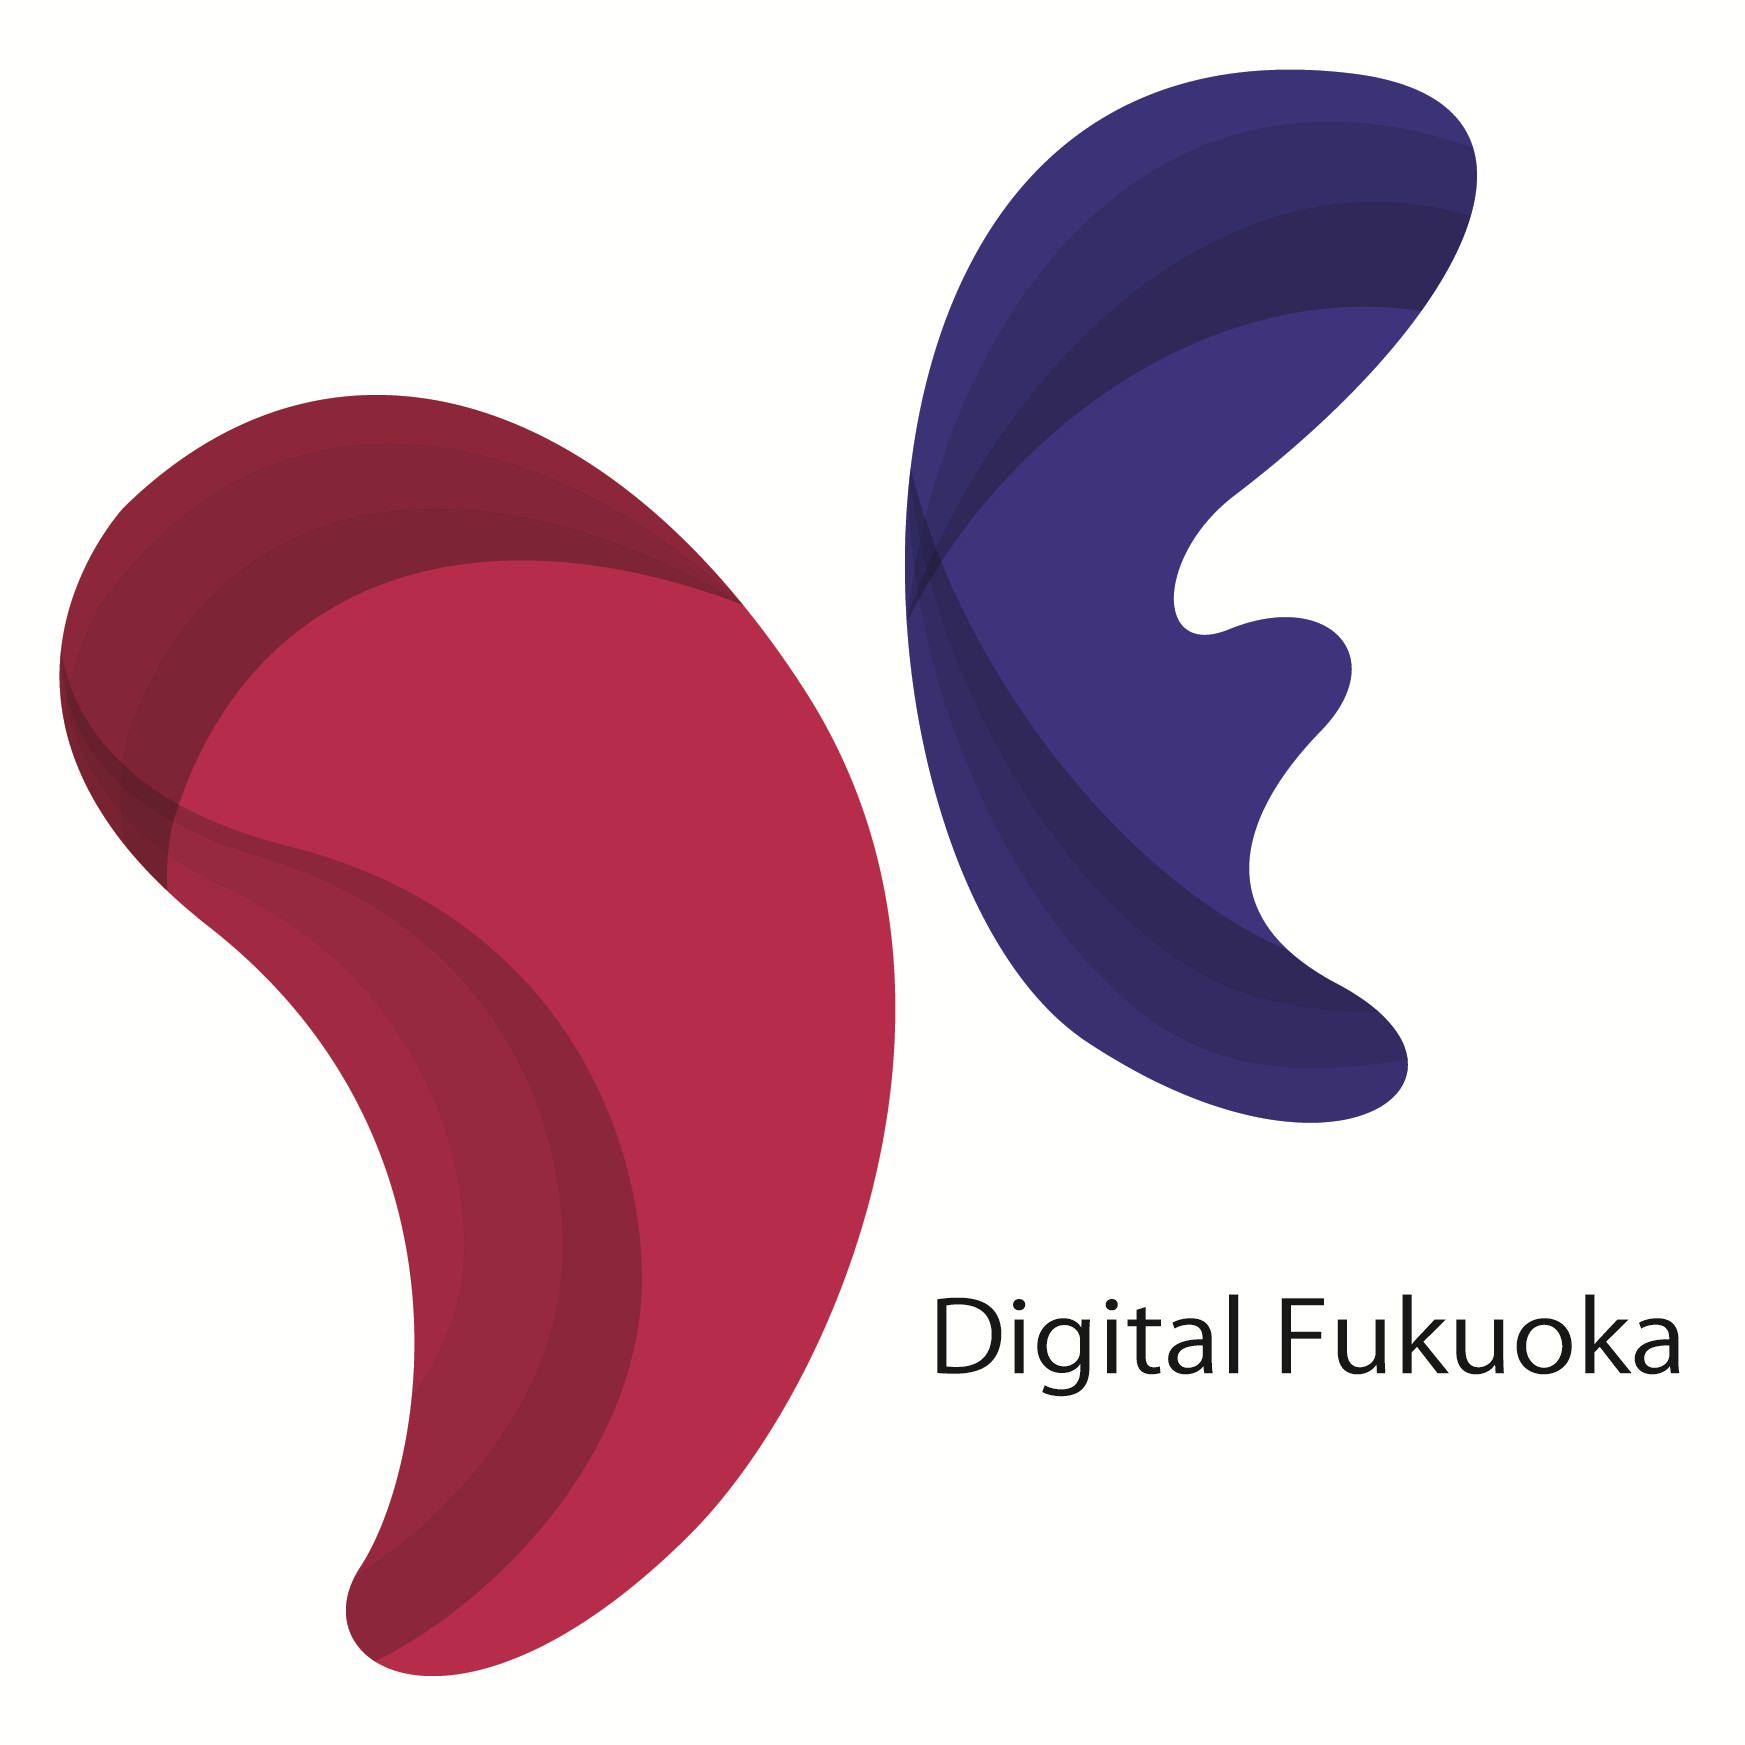 Digital Fukuoka